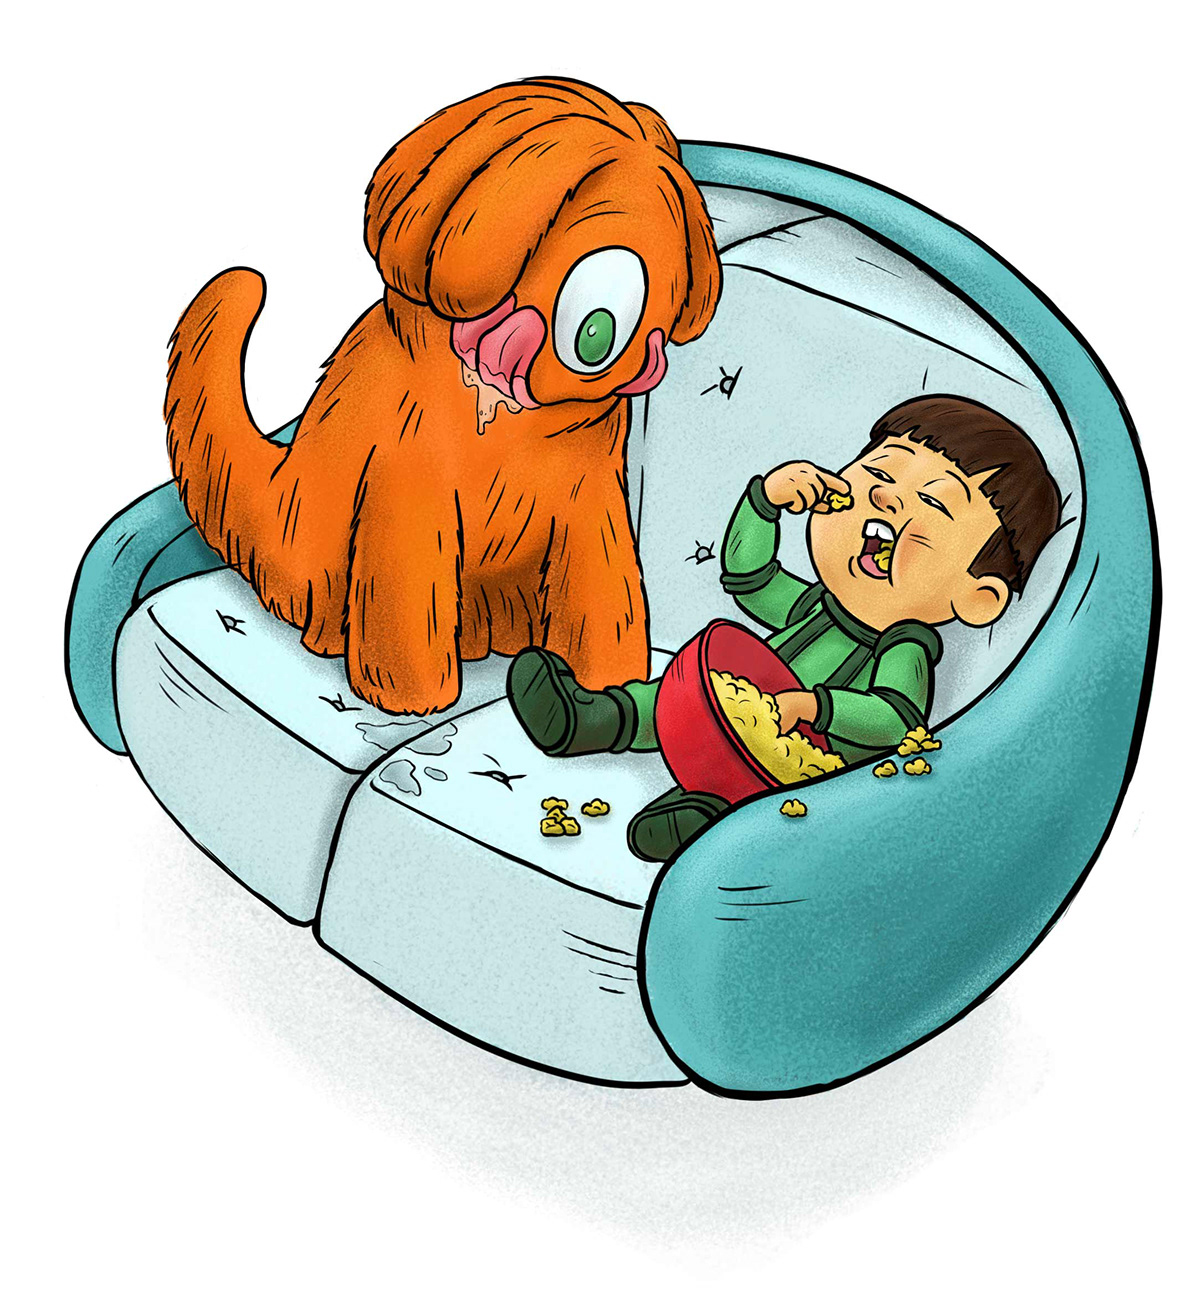 aliens Pet dog pets dogs alien popcorn Couch child kid asian children's book